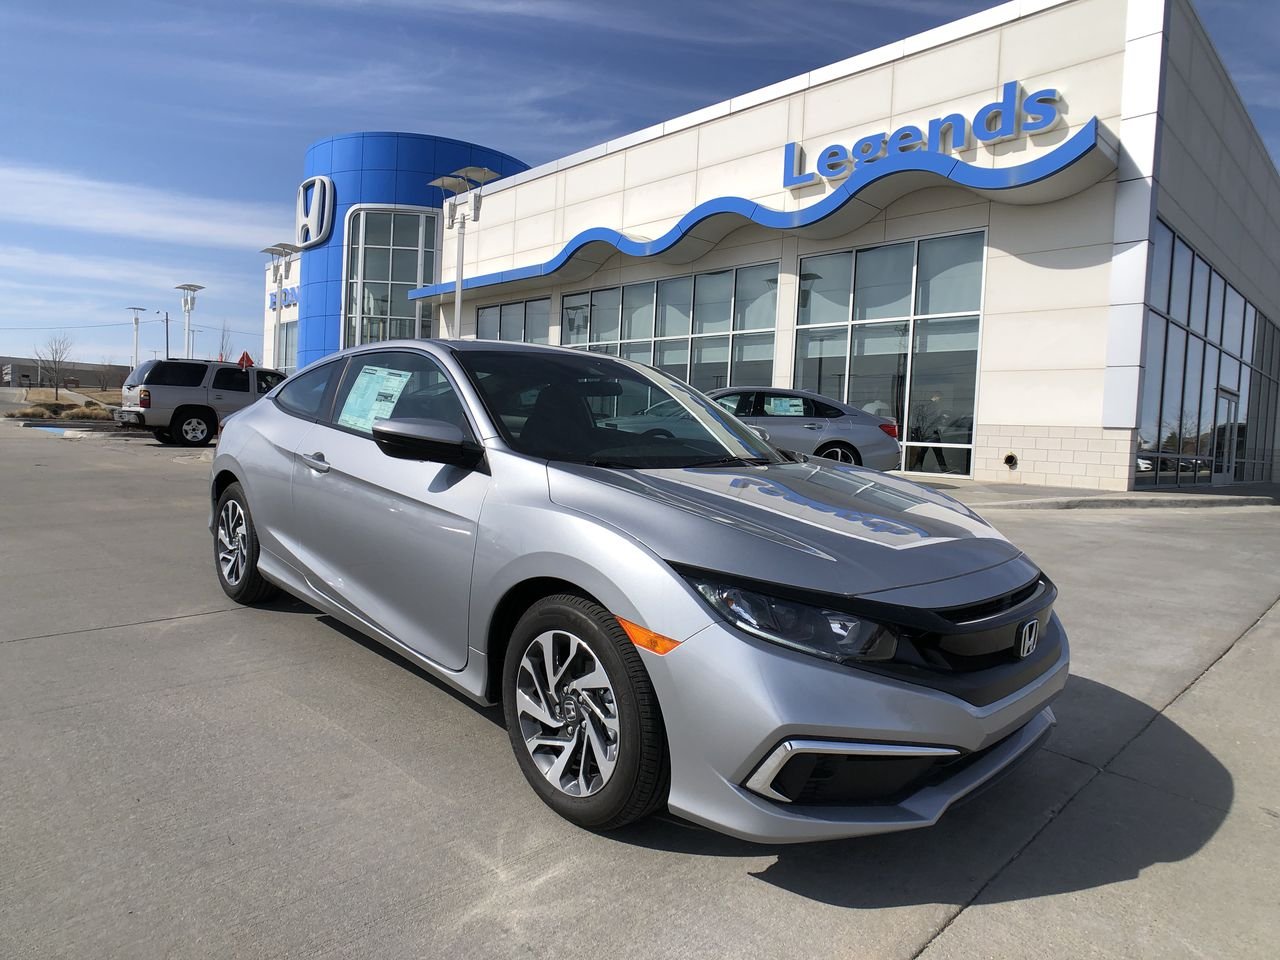 New 2019 Honda Civic Coupe LX in Kansas City #CI08910 | Legends Honda